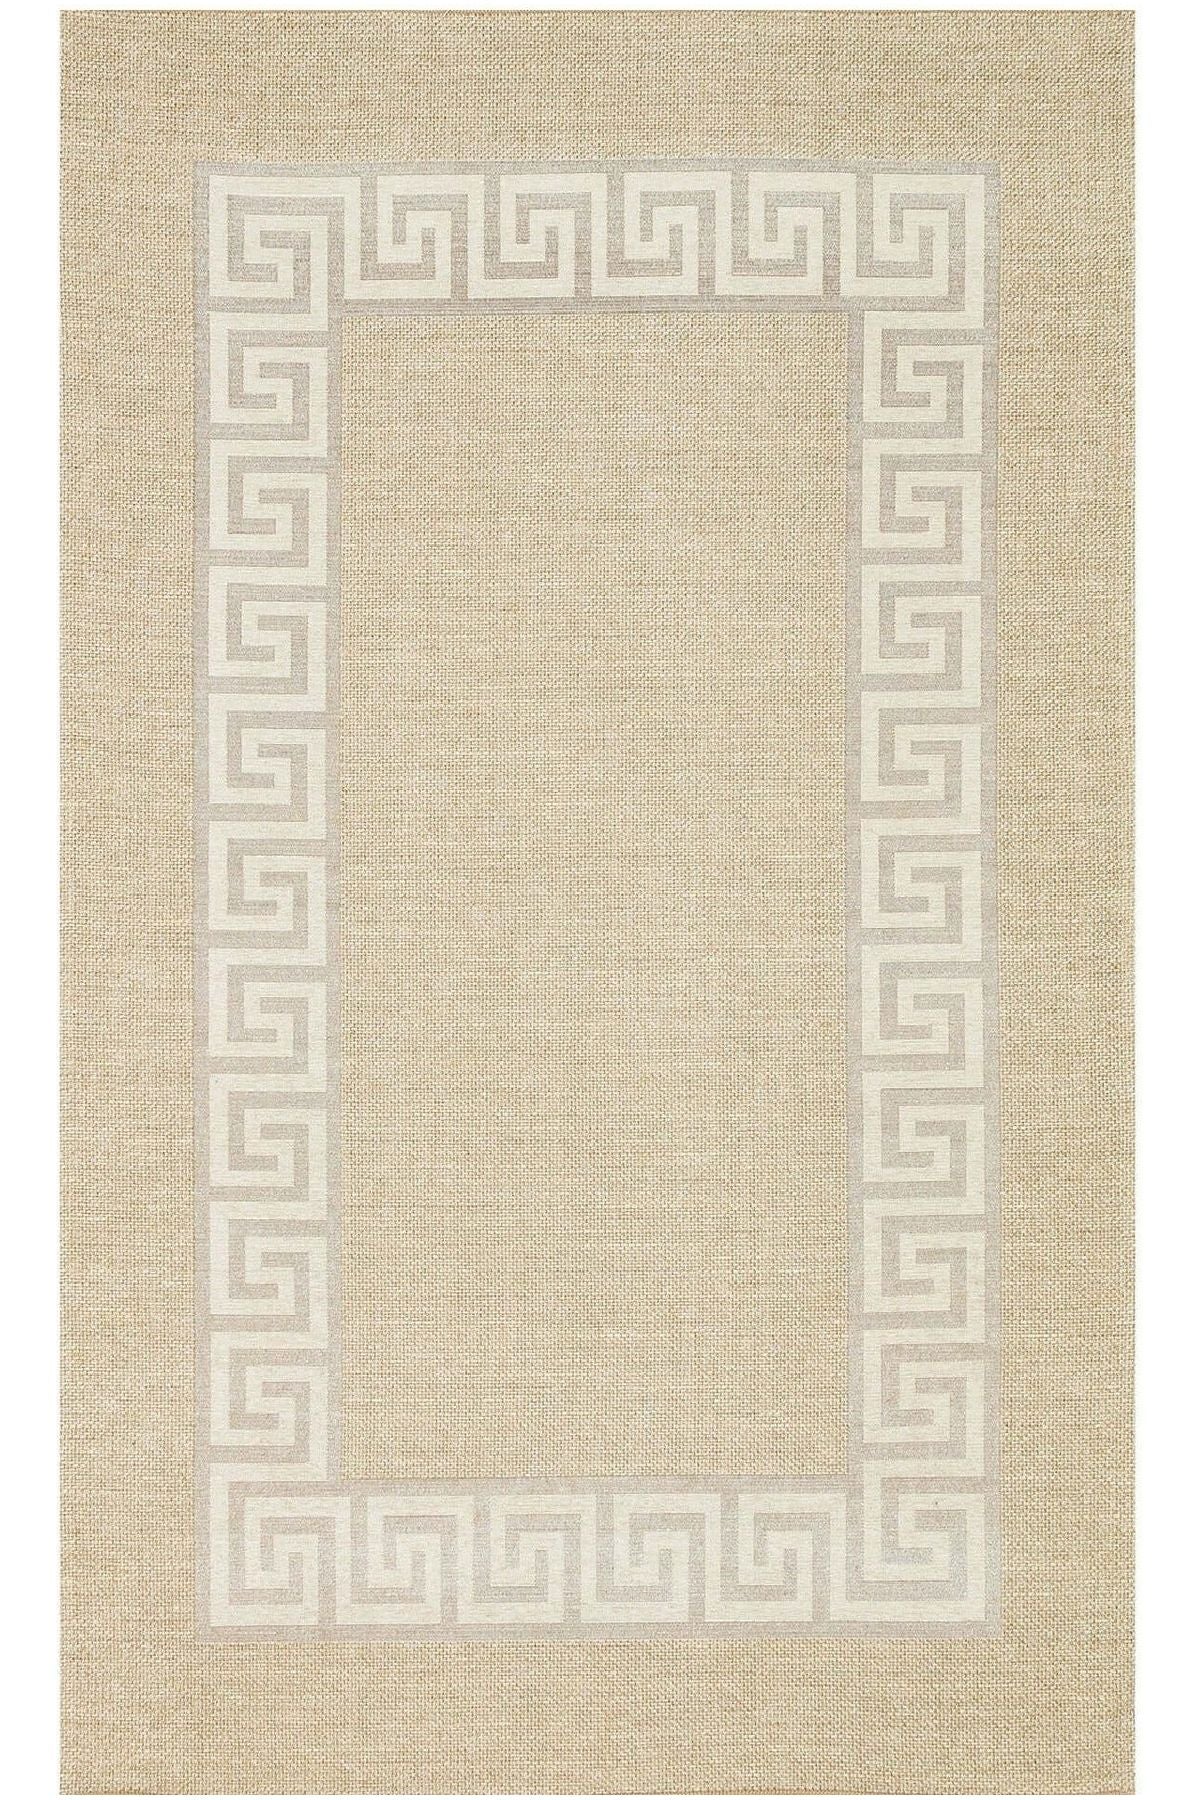 #Turkish_Carpets_Rugs# #Modern_Carpets# #Abrash_Carpets#Brk 11 Natural White